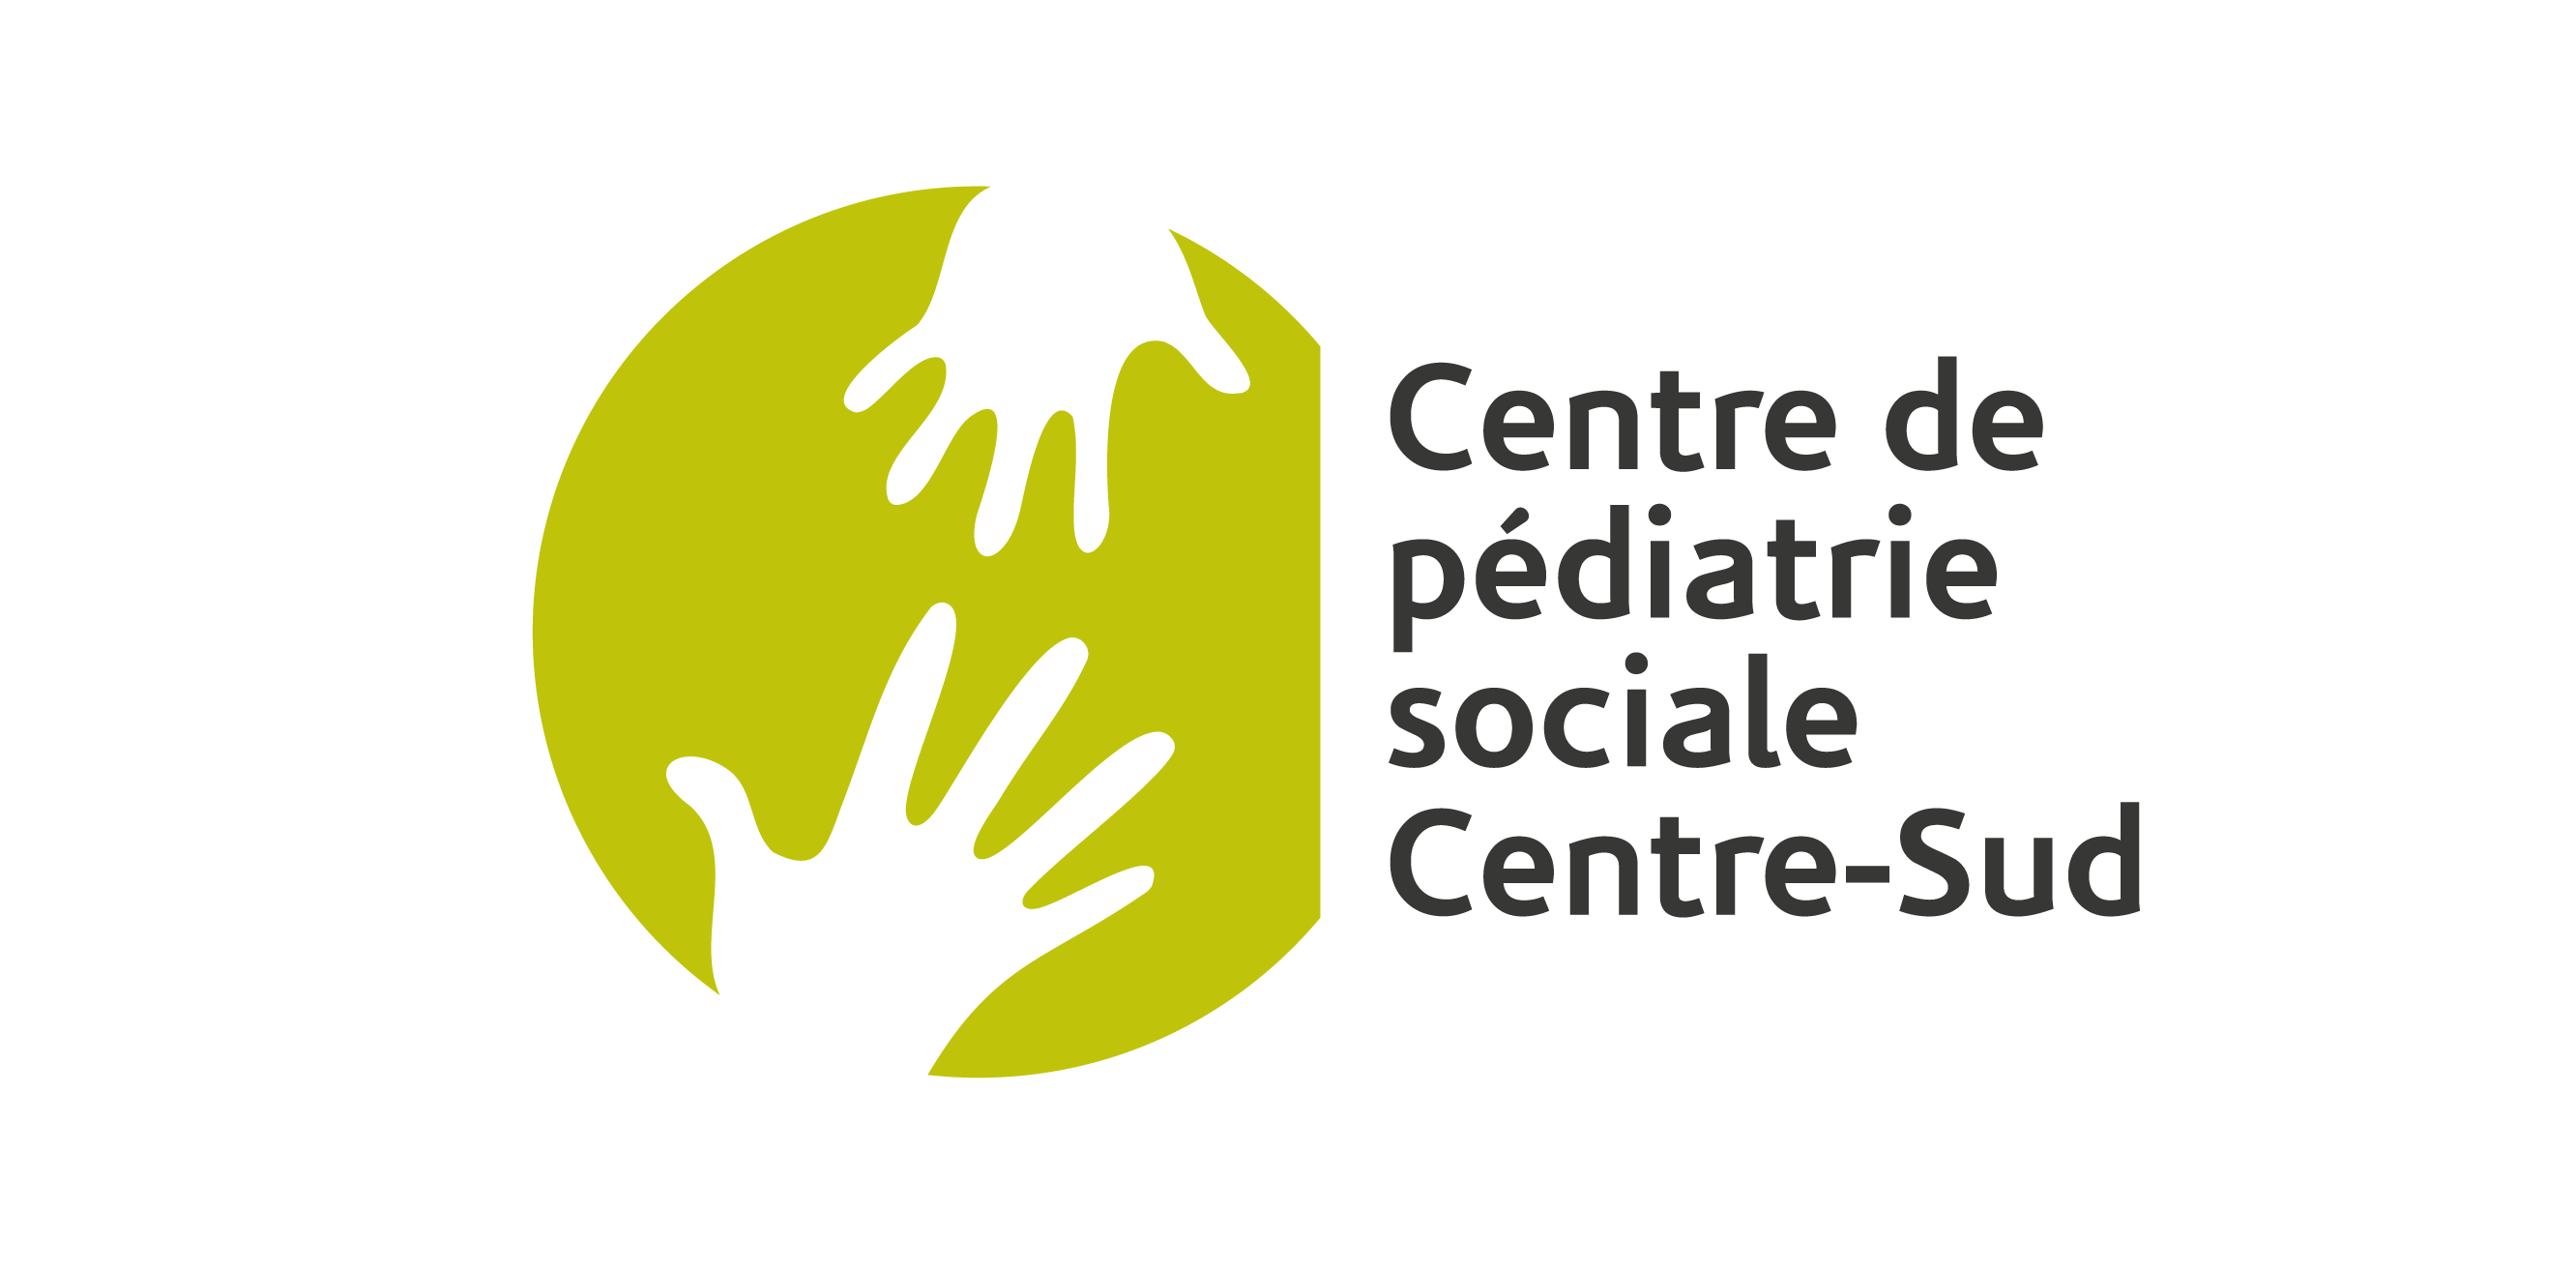 Centre de pédiatrie sociale Centre-Sud logo